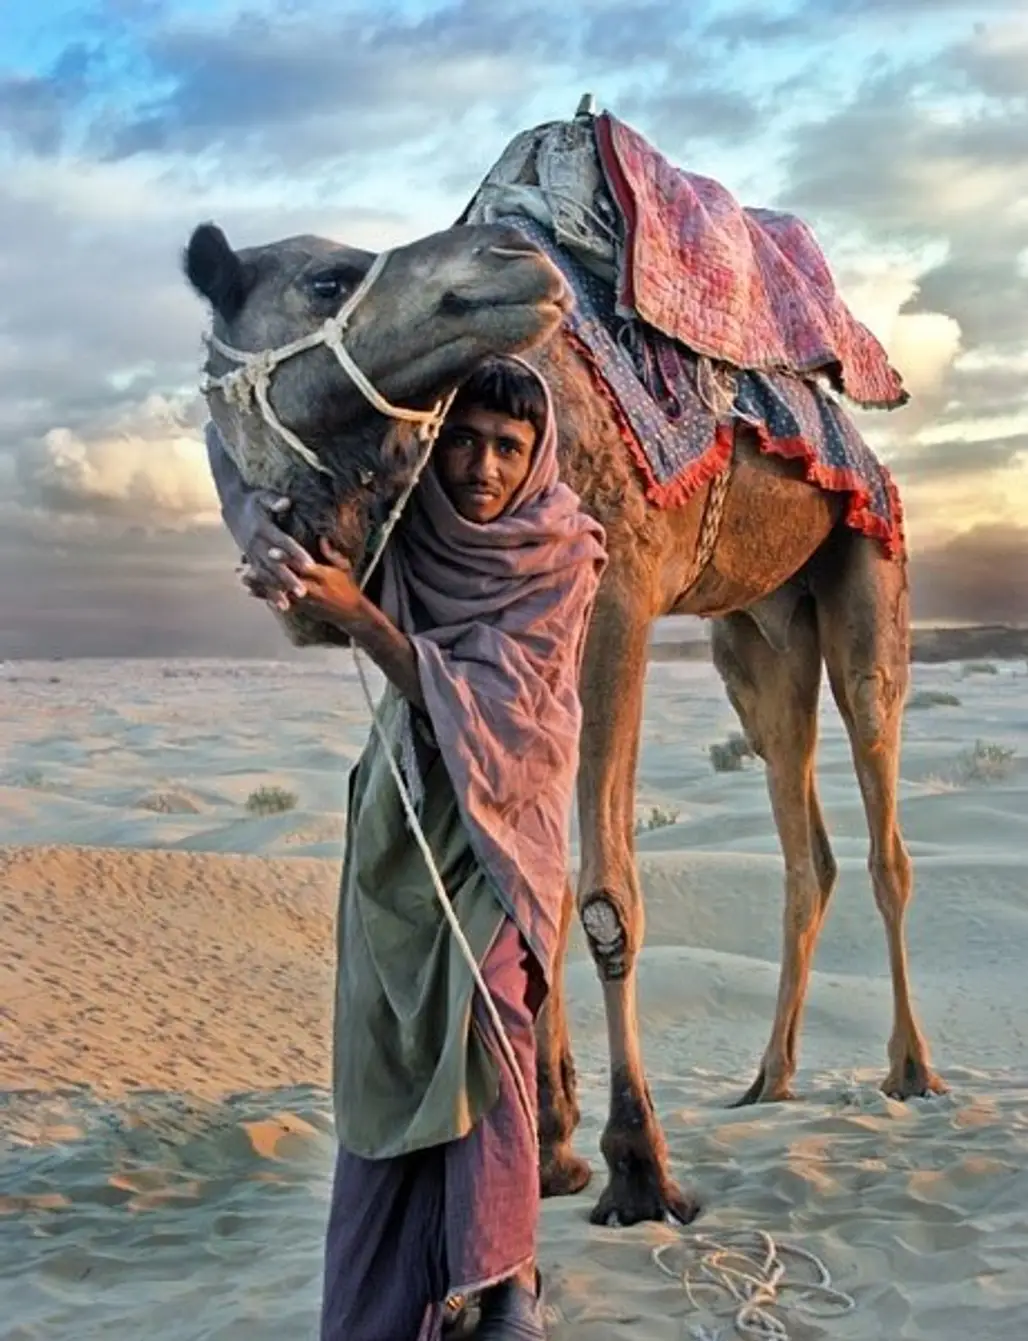 Sand Dunes, the Desert of Rajasthan